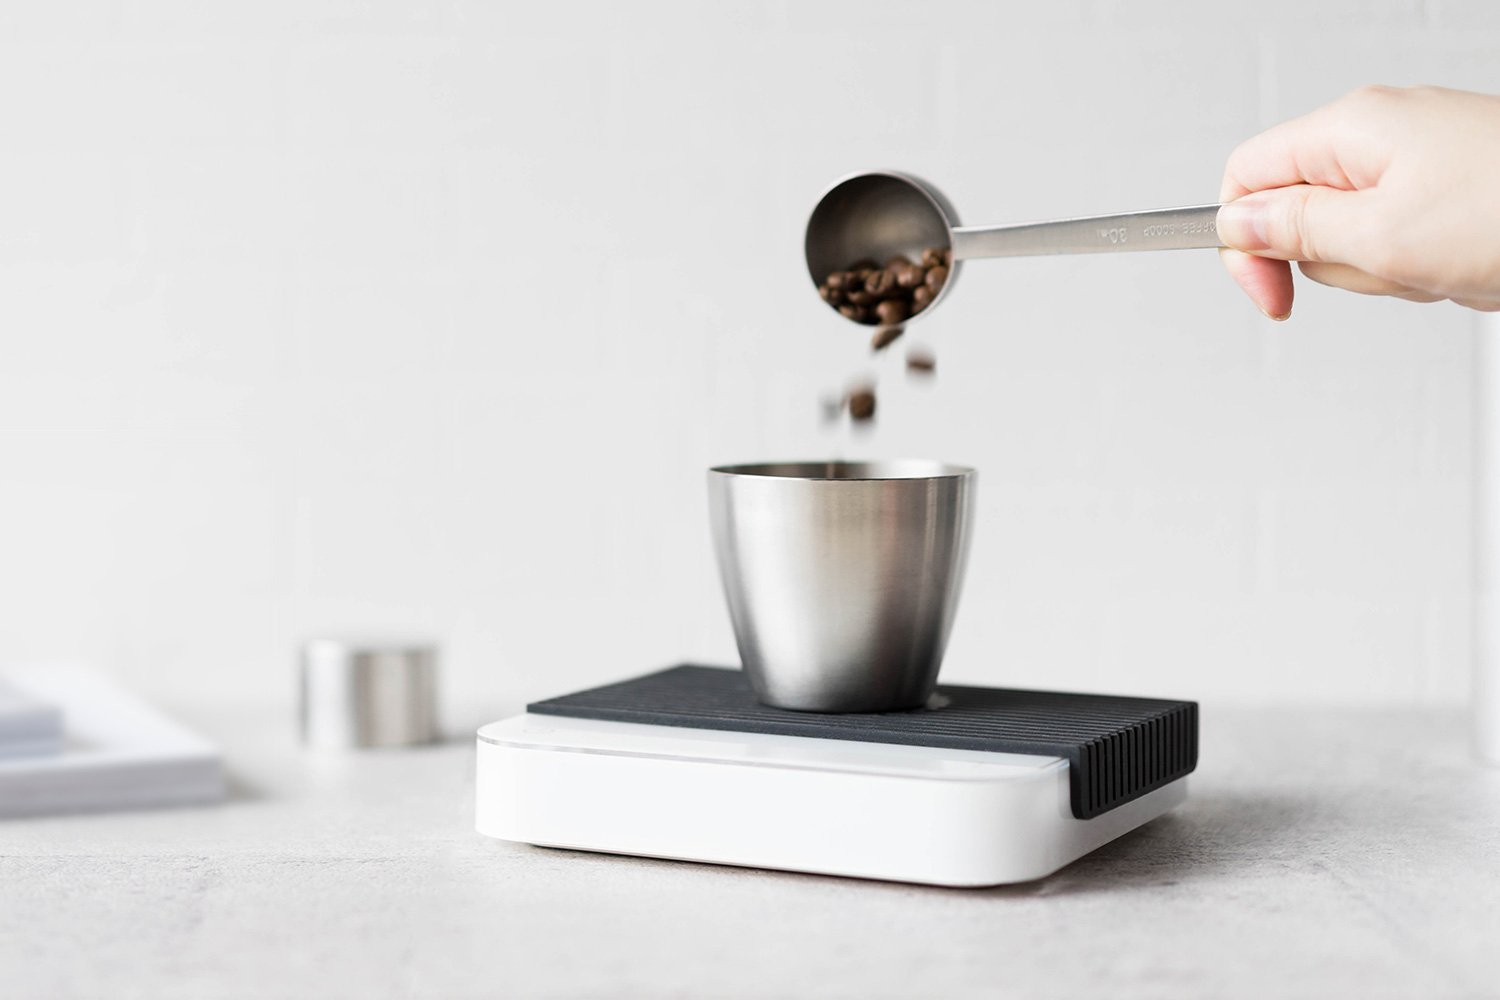 Acaia Pearl Coffee Scale - FreshGround Roasting